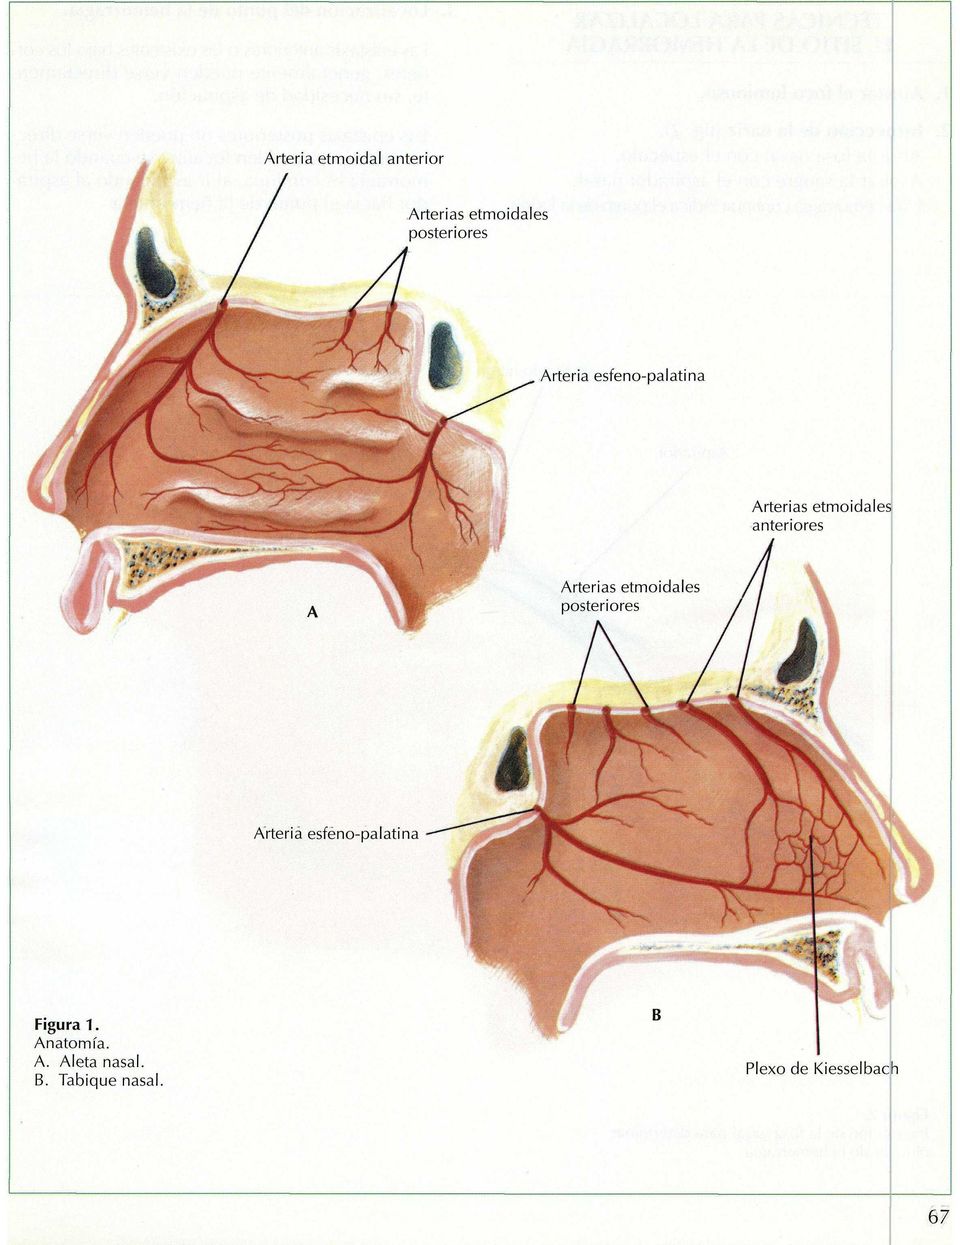 esfeno-palatina Arterias etmoidales anteriores A